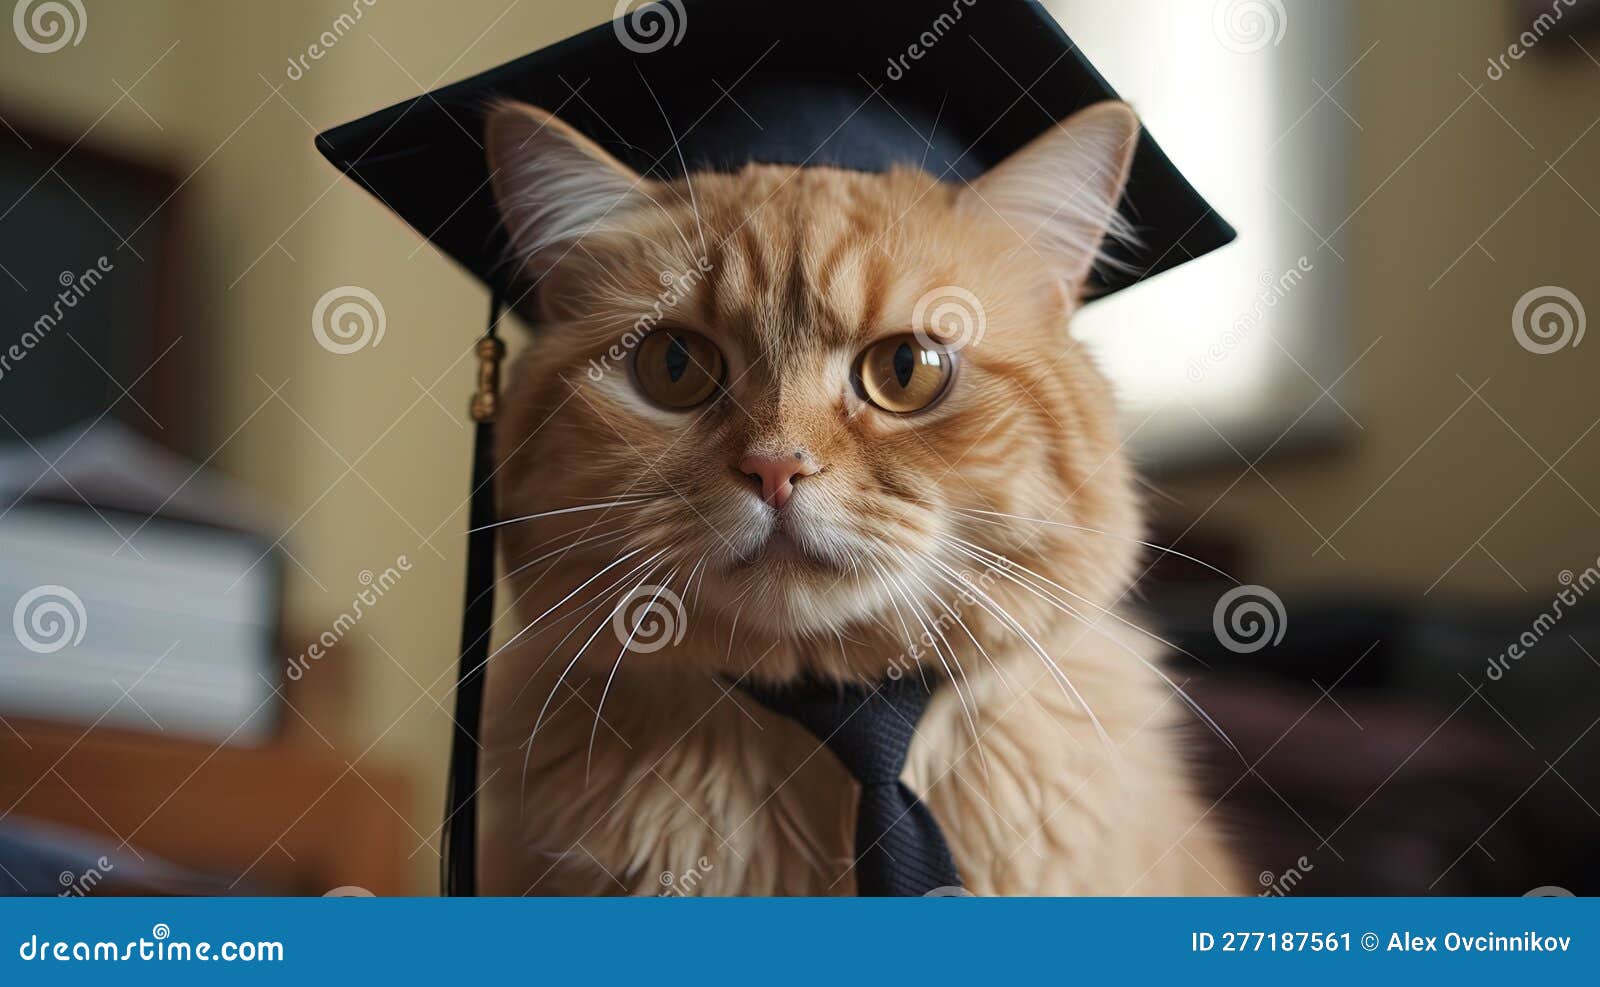 felino academe: the educated cat professor heading off to class.